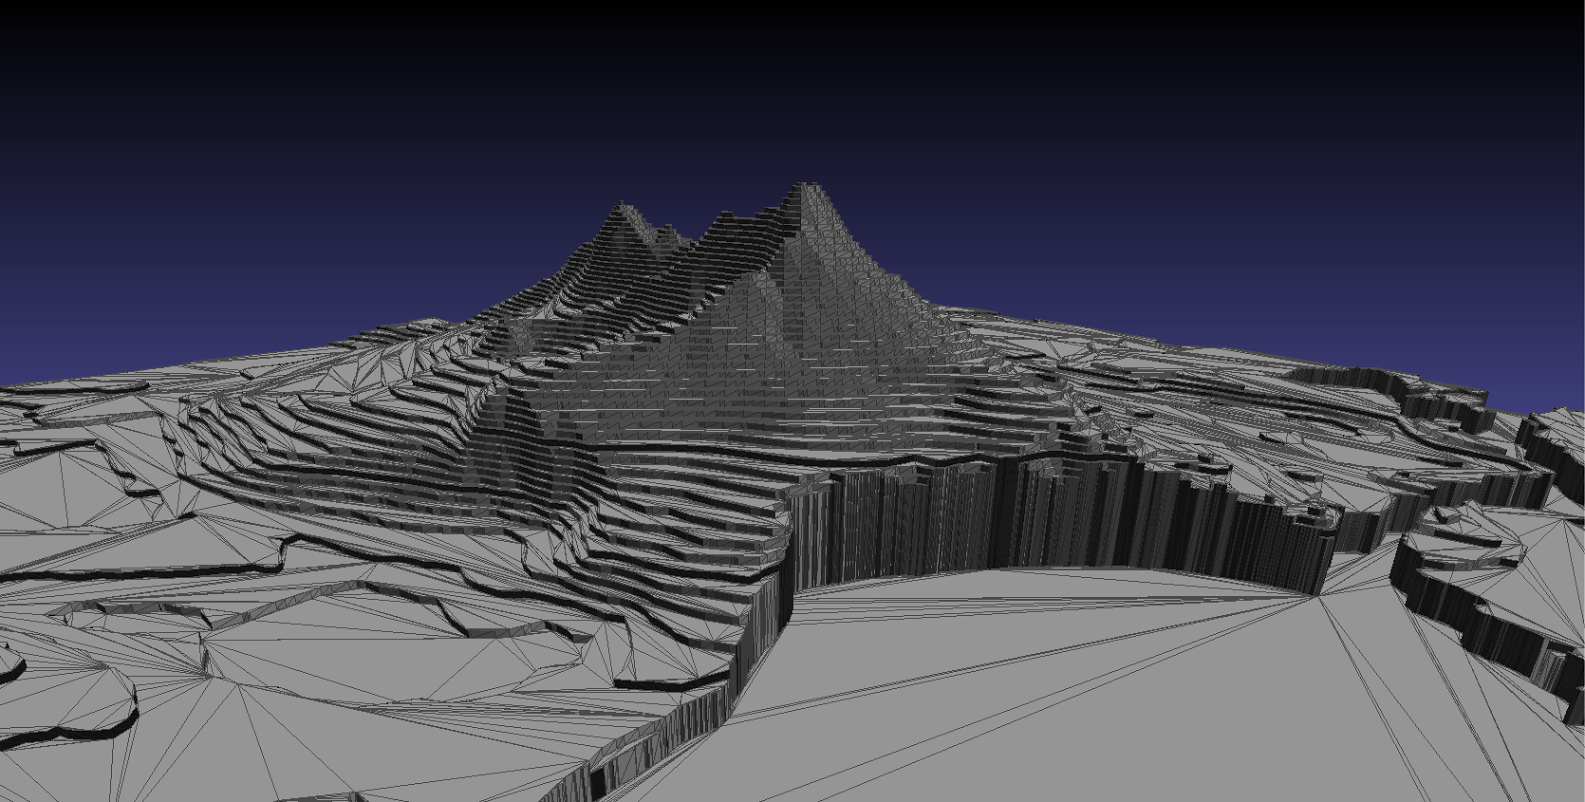 3D Model that McCune created of the Napa, California quake.